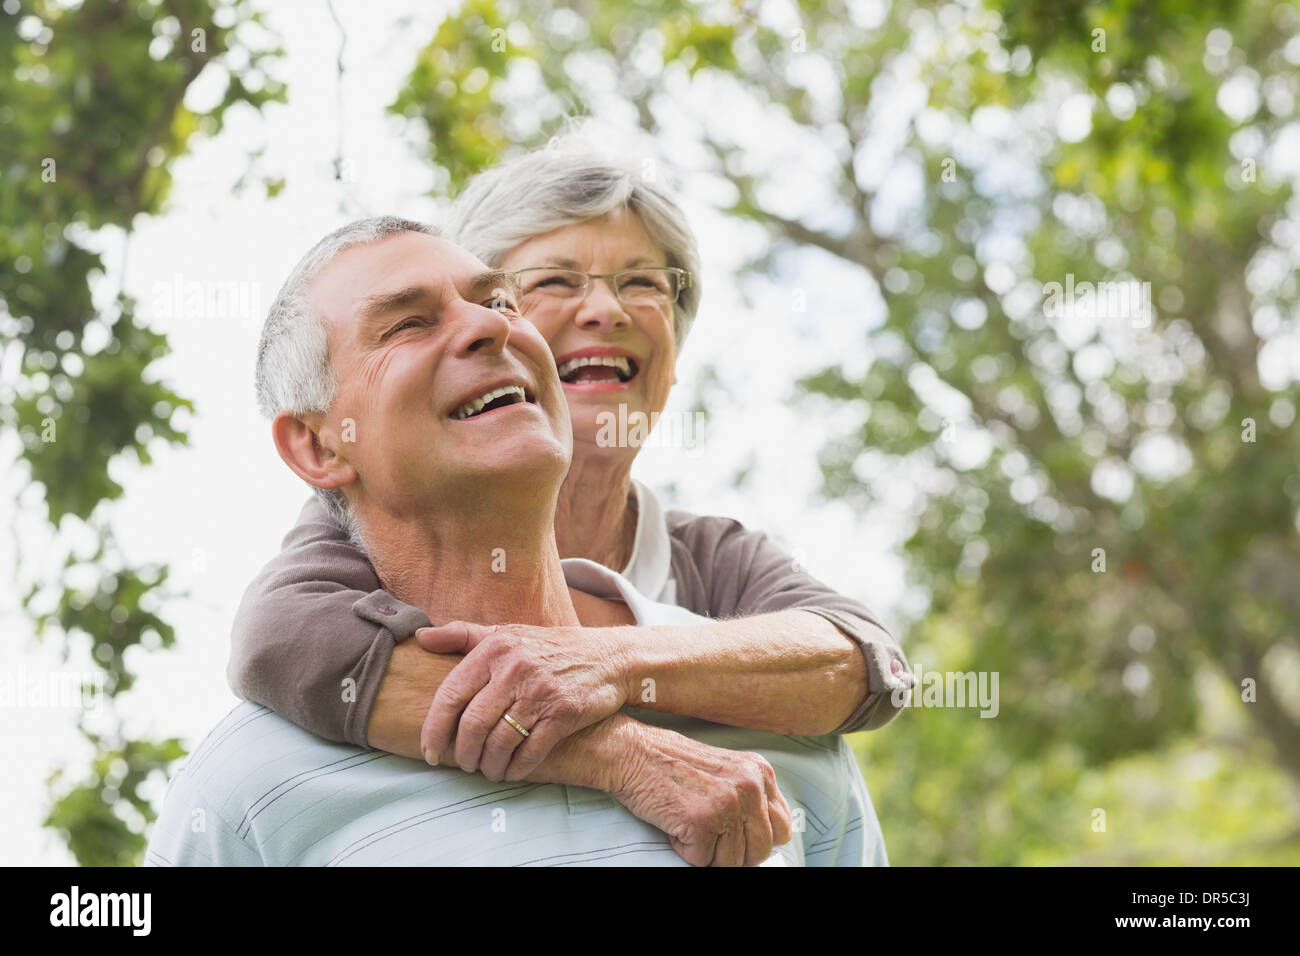 Senior woman embracing man from behind Stock Photo